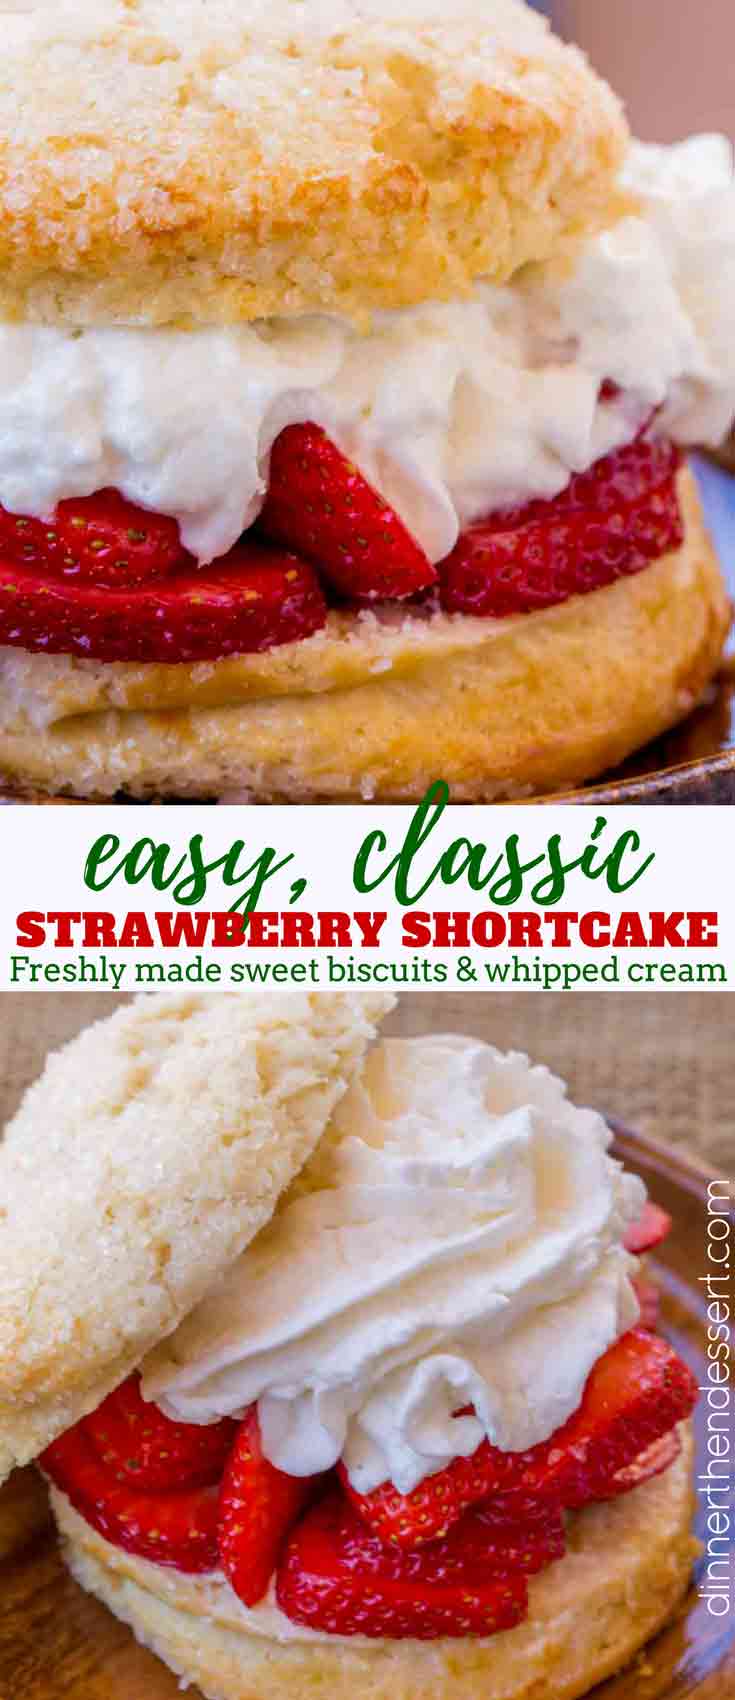 strawberry shortcake collage